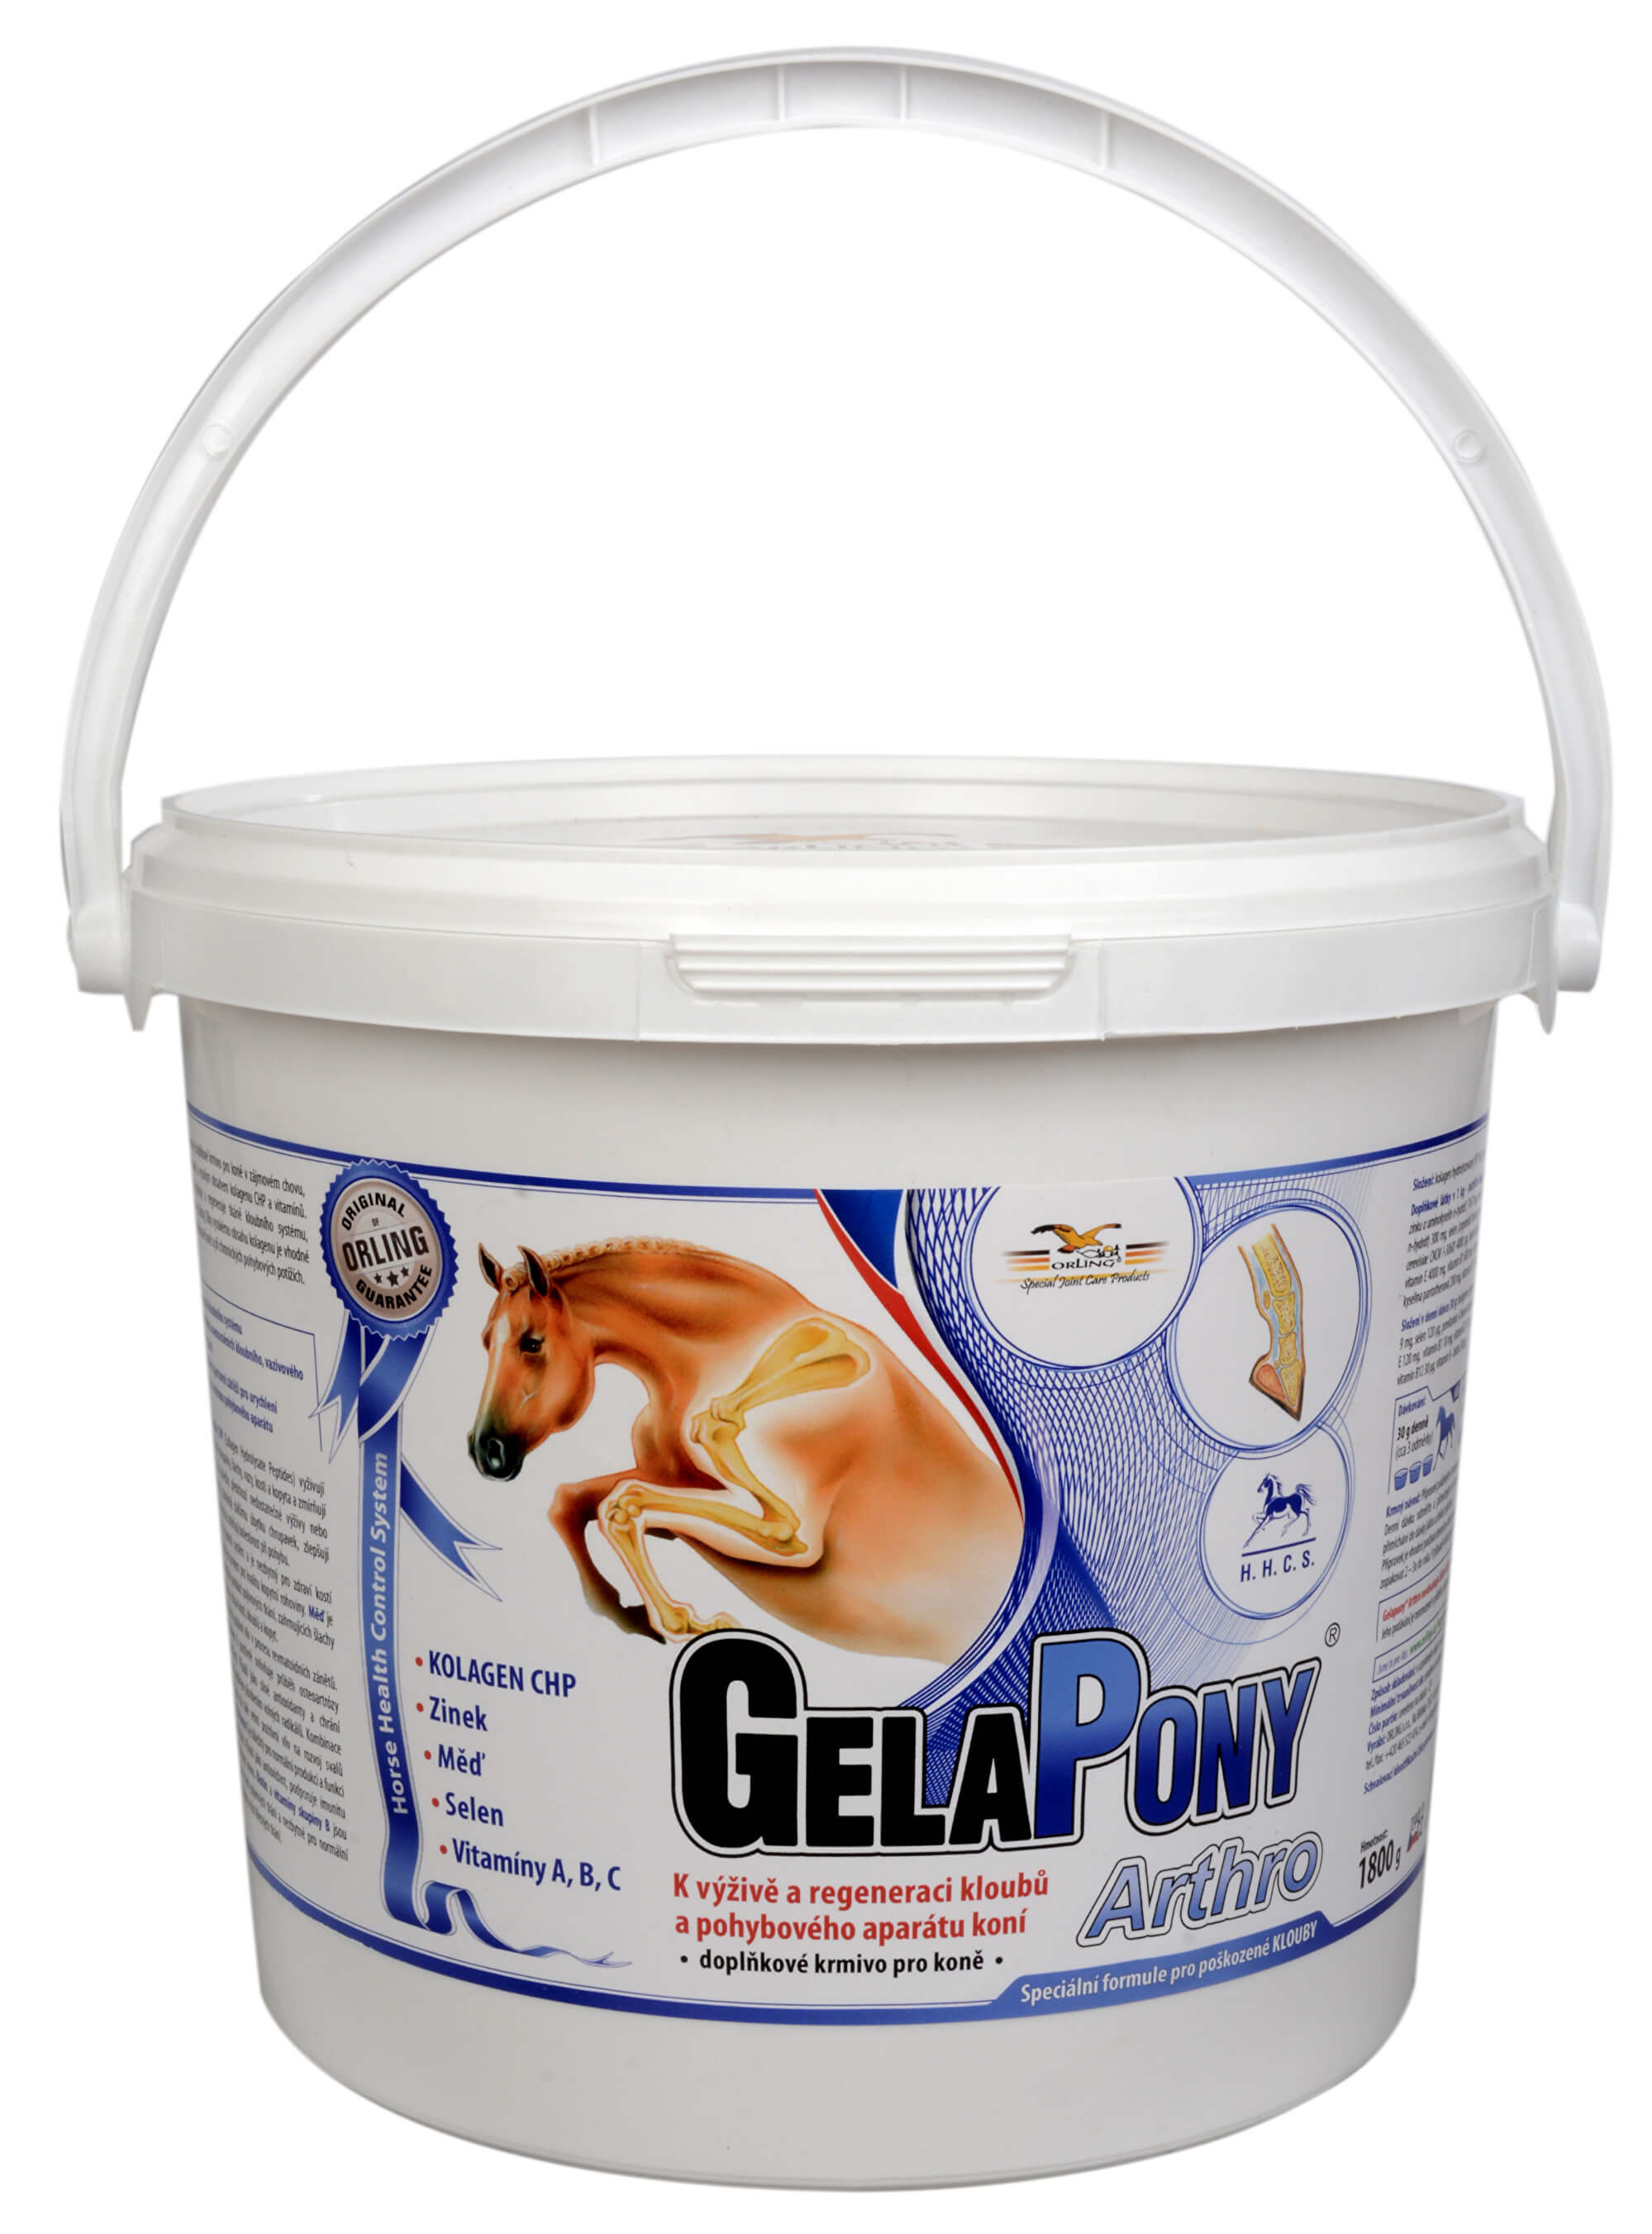 Gelapony Gelapony Arthro 1800 g